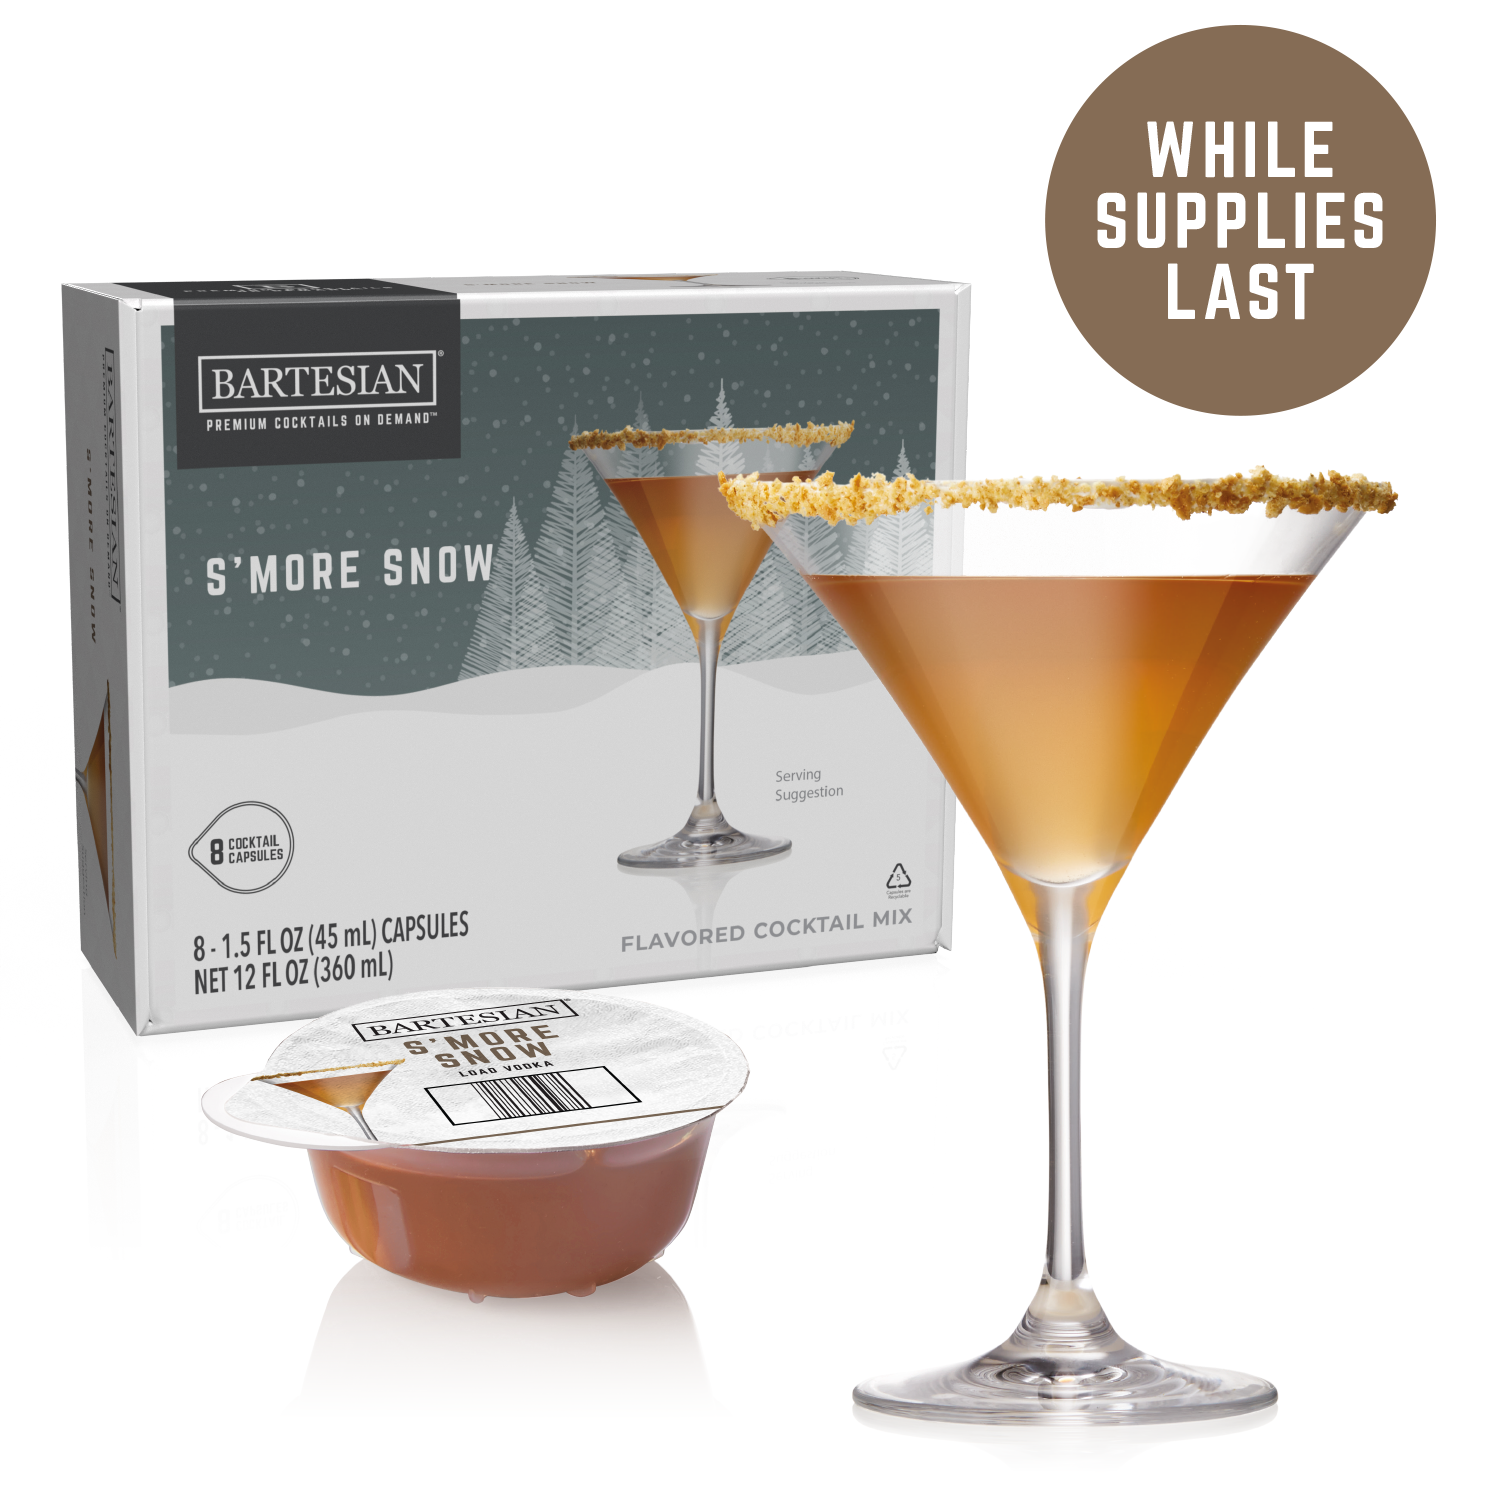 Bartesian Premium Cocktails on Demand